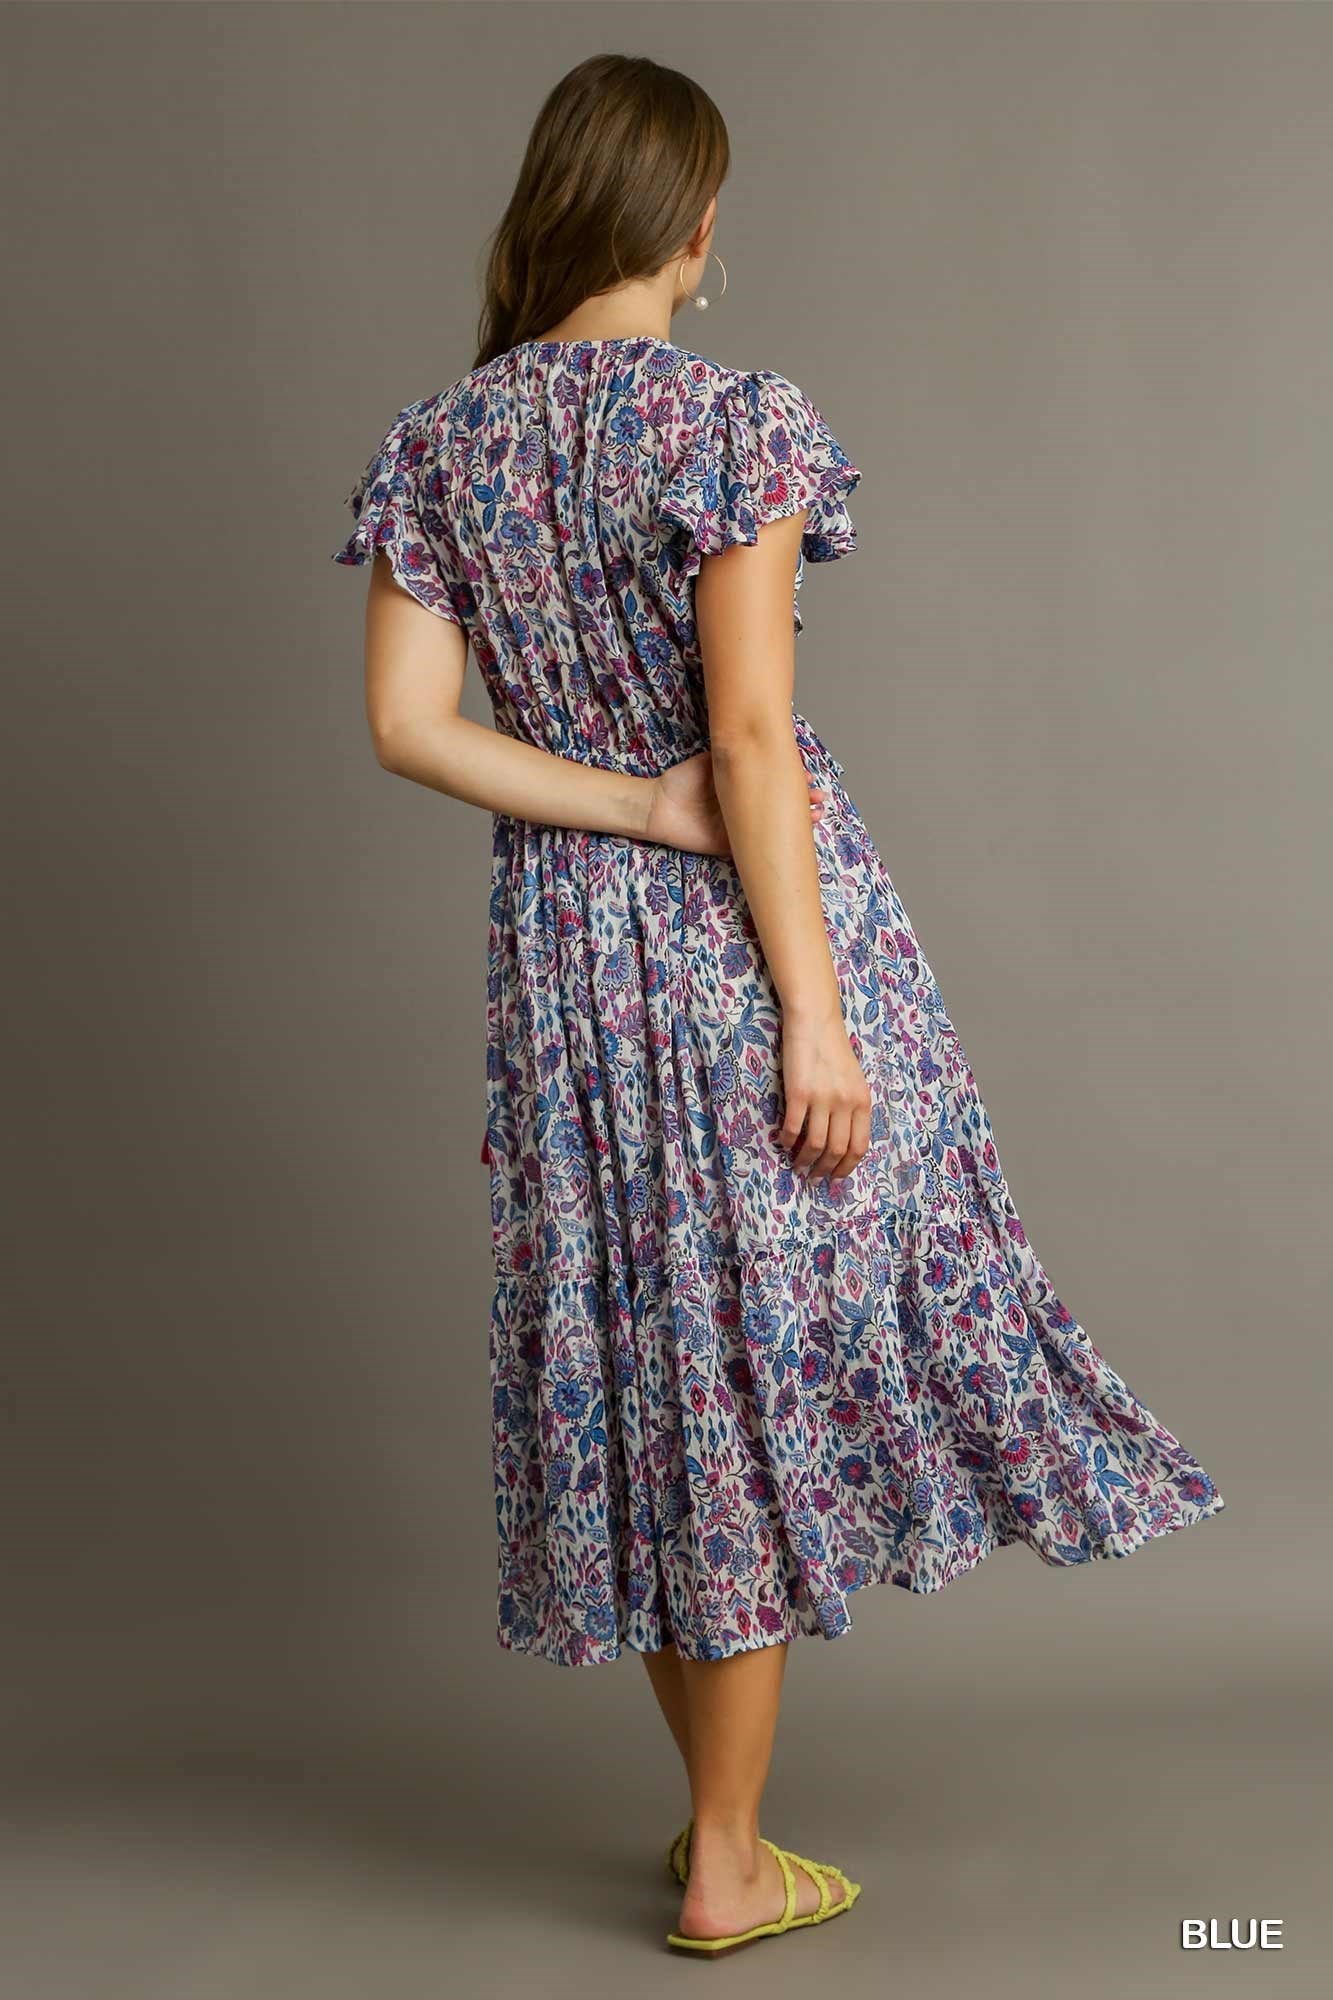 Metallic Floral Print Maxi Dress